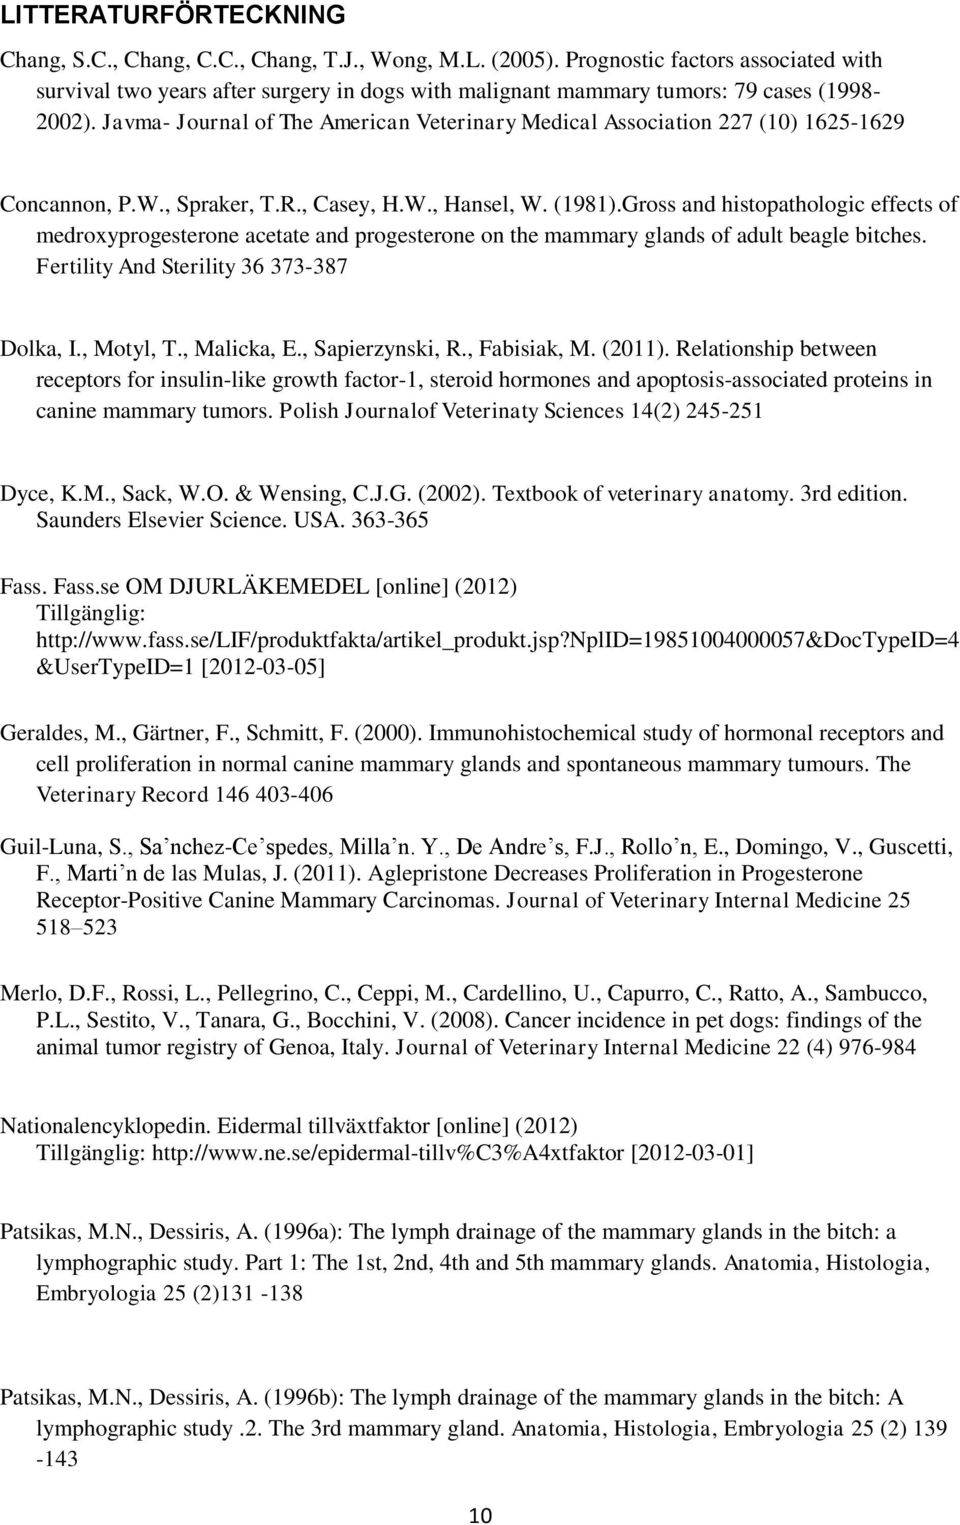 Javma- Journal of The American Veterinary Medical Association 227 (10) 1625-1629 Concannon, P.W., Spraker, T.R., Casey, H.W., Hansel, W. (1981).